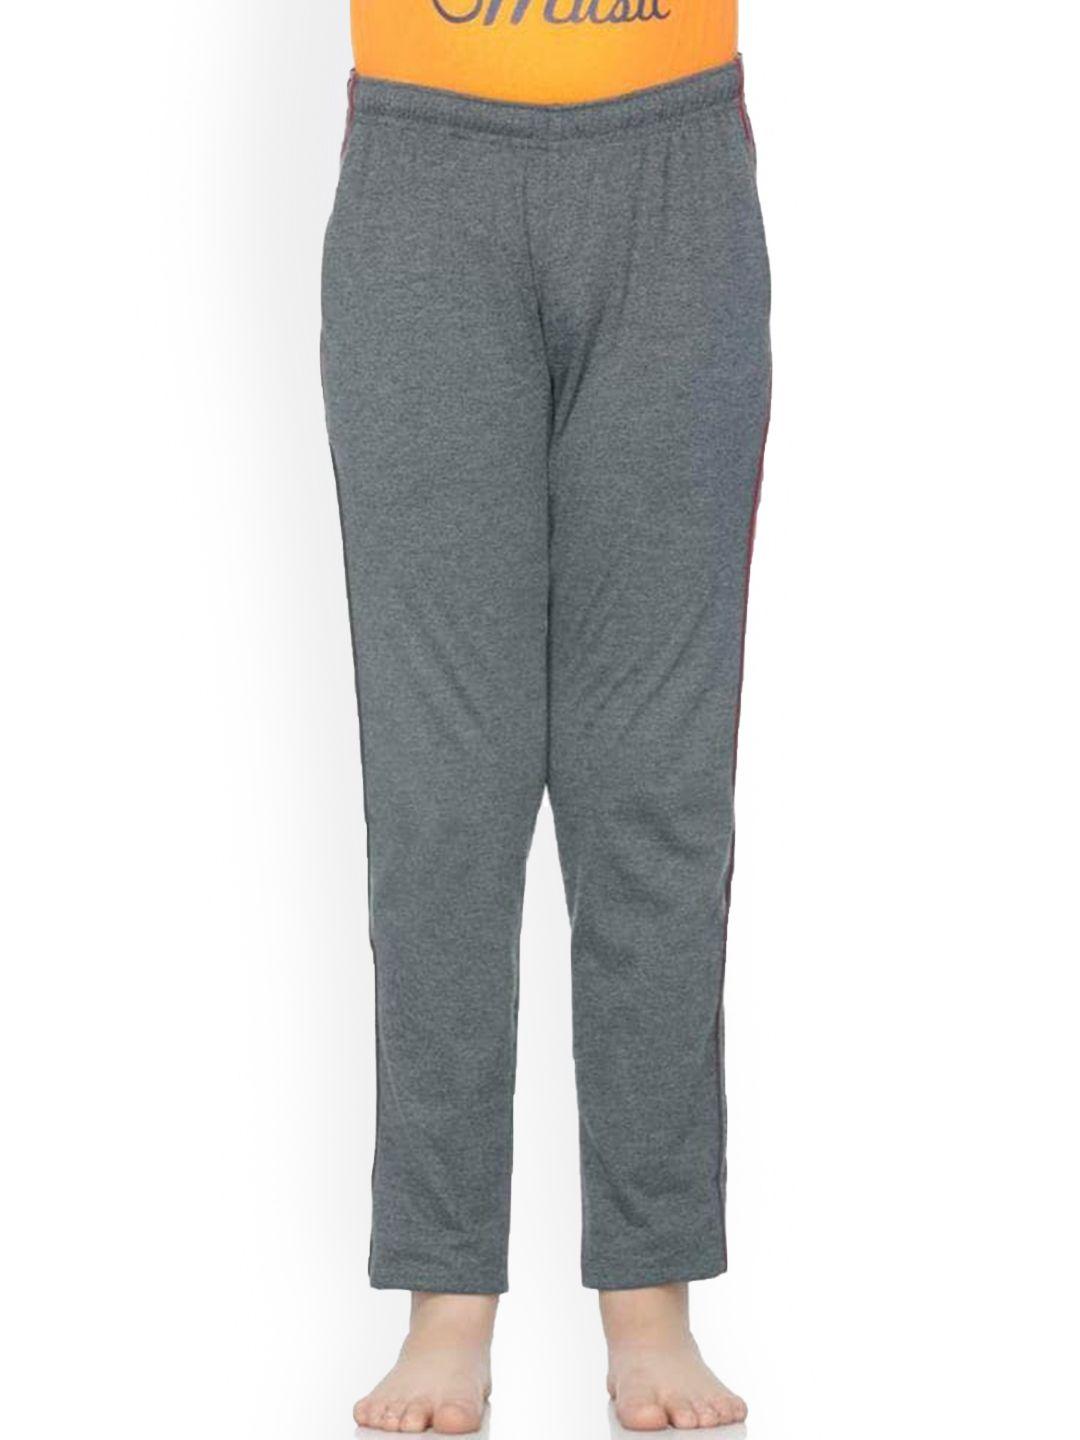 dyca boys grey solid cotton lounge pants